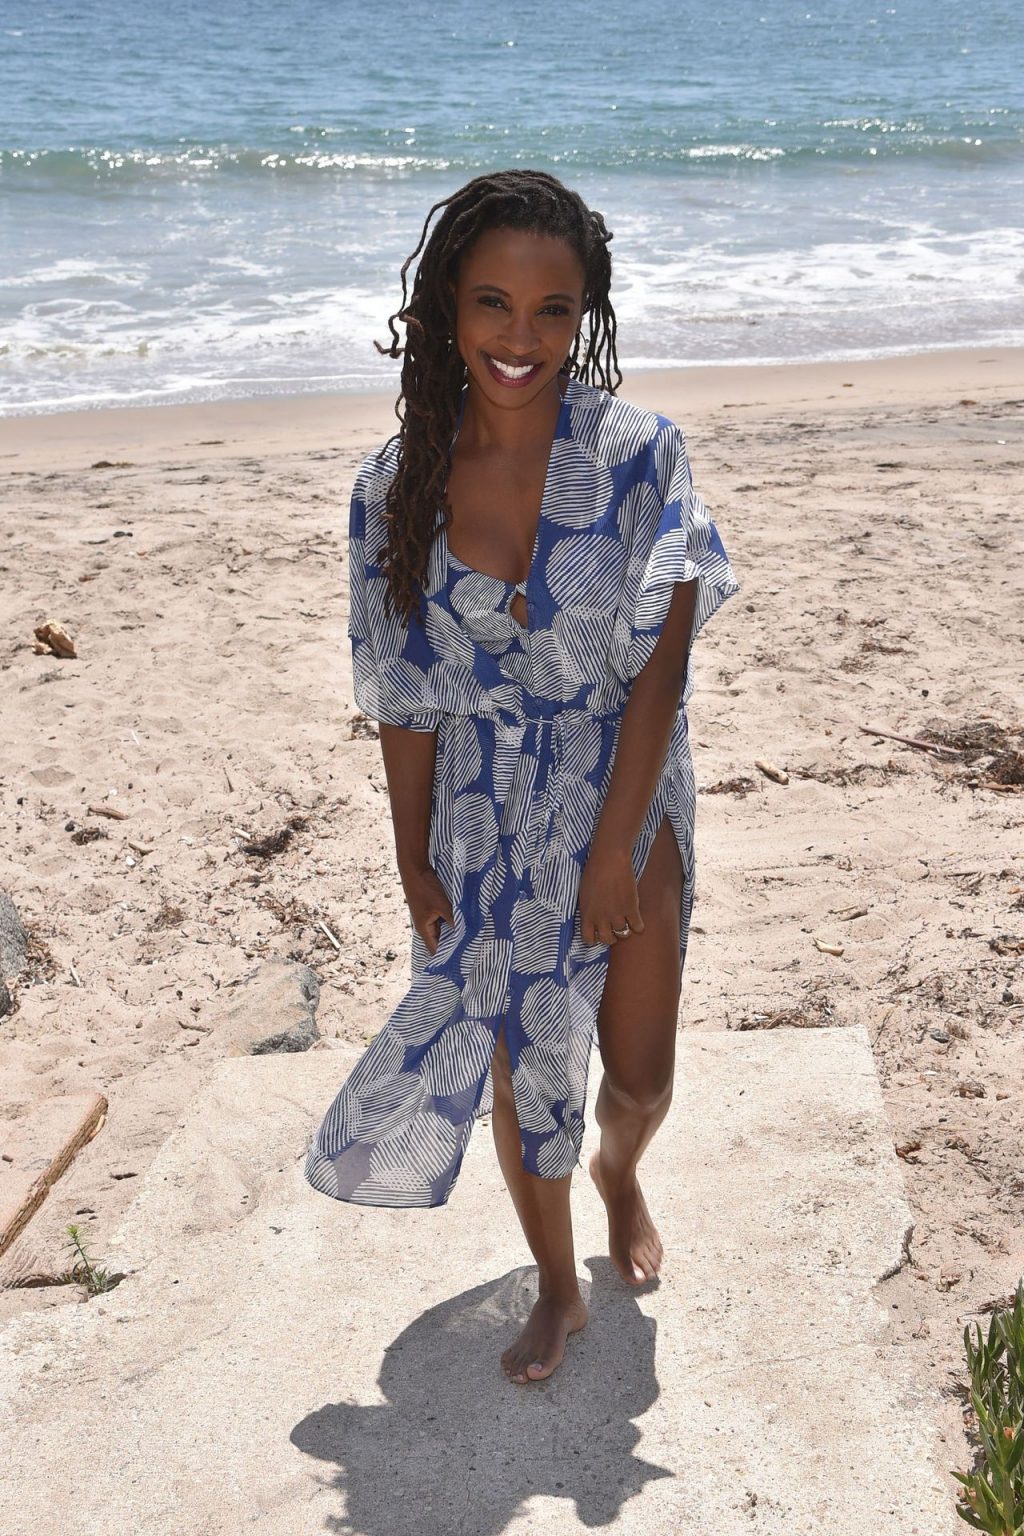 Shanola Hampton Poses in a Bikini on the Beach in Malibu (12 Photos)